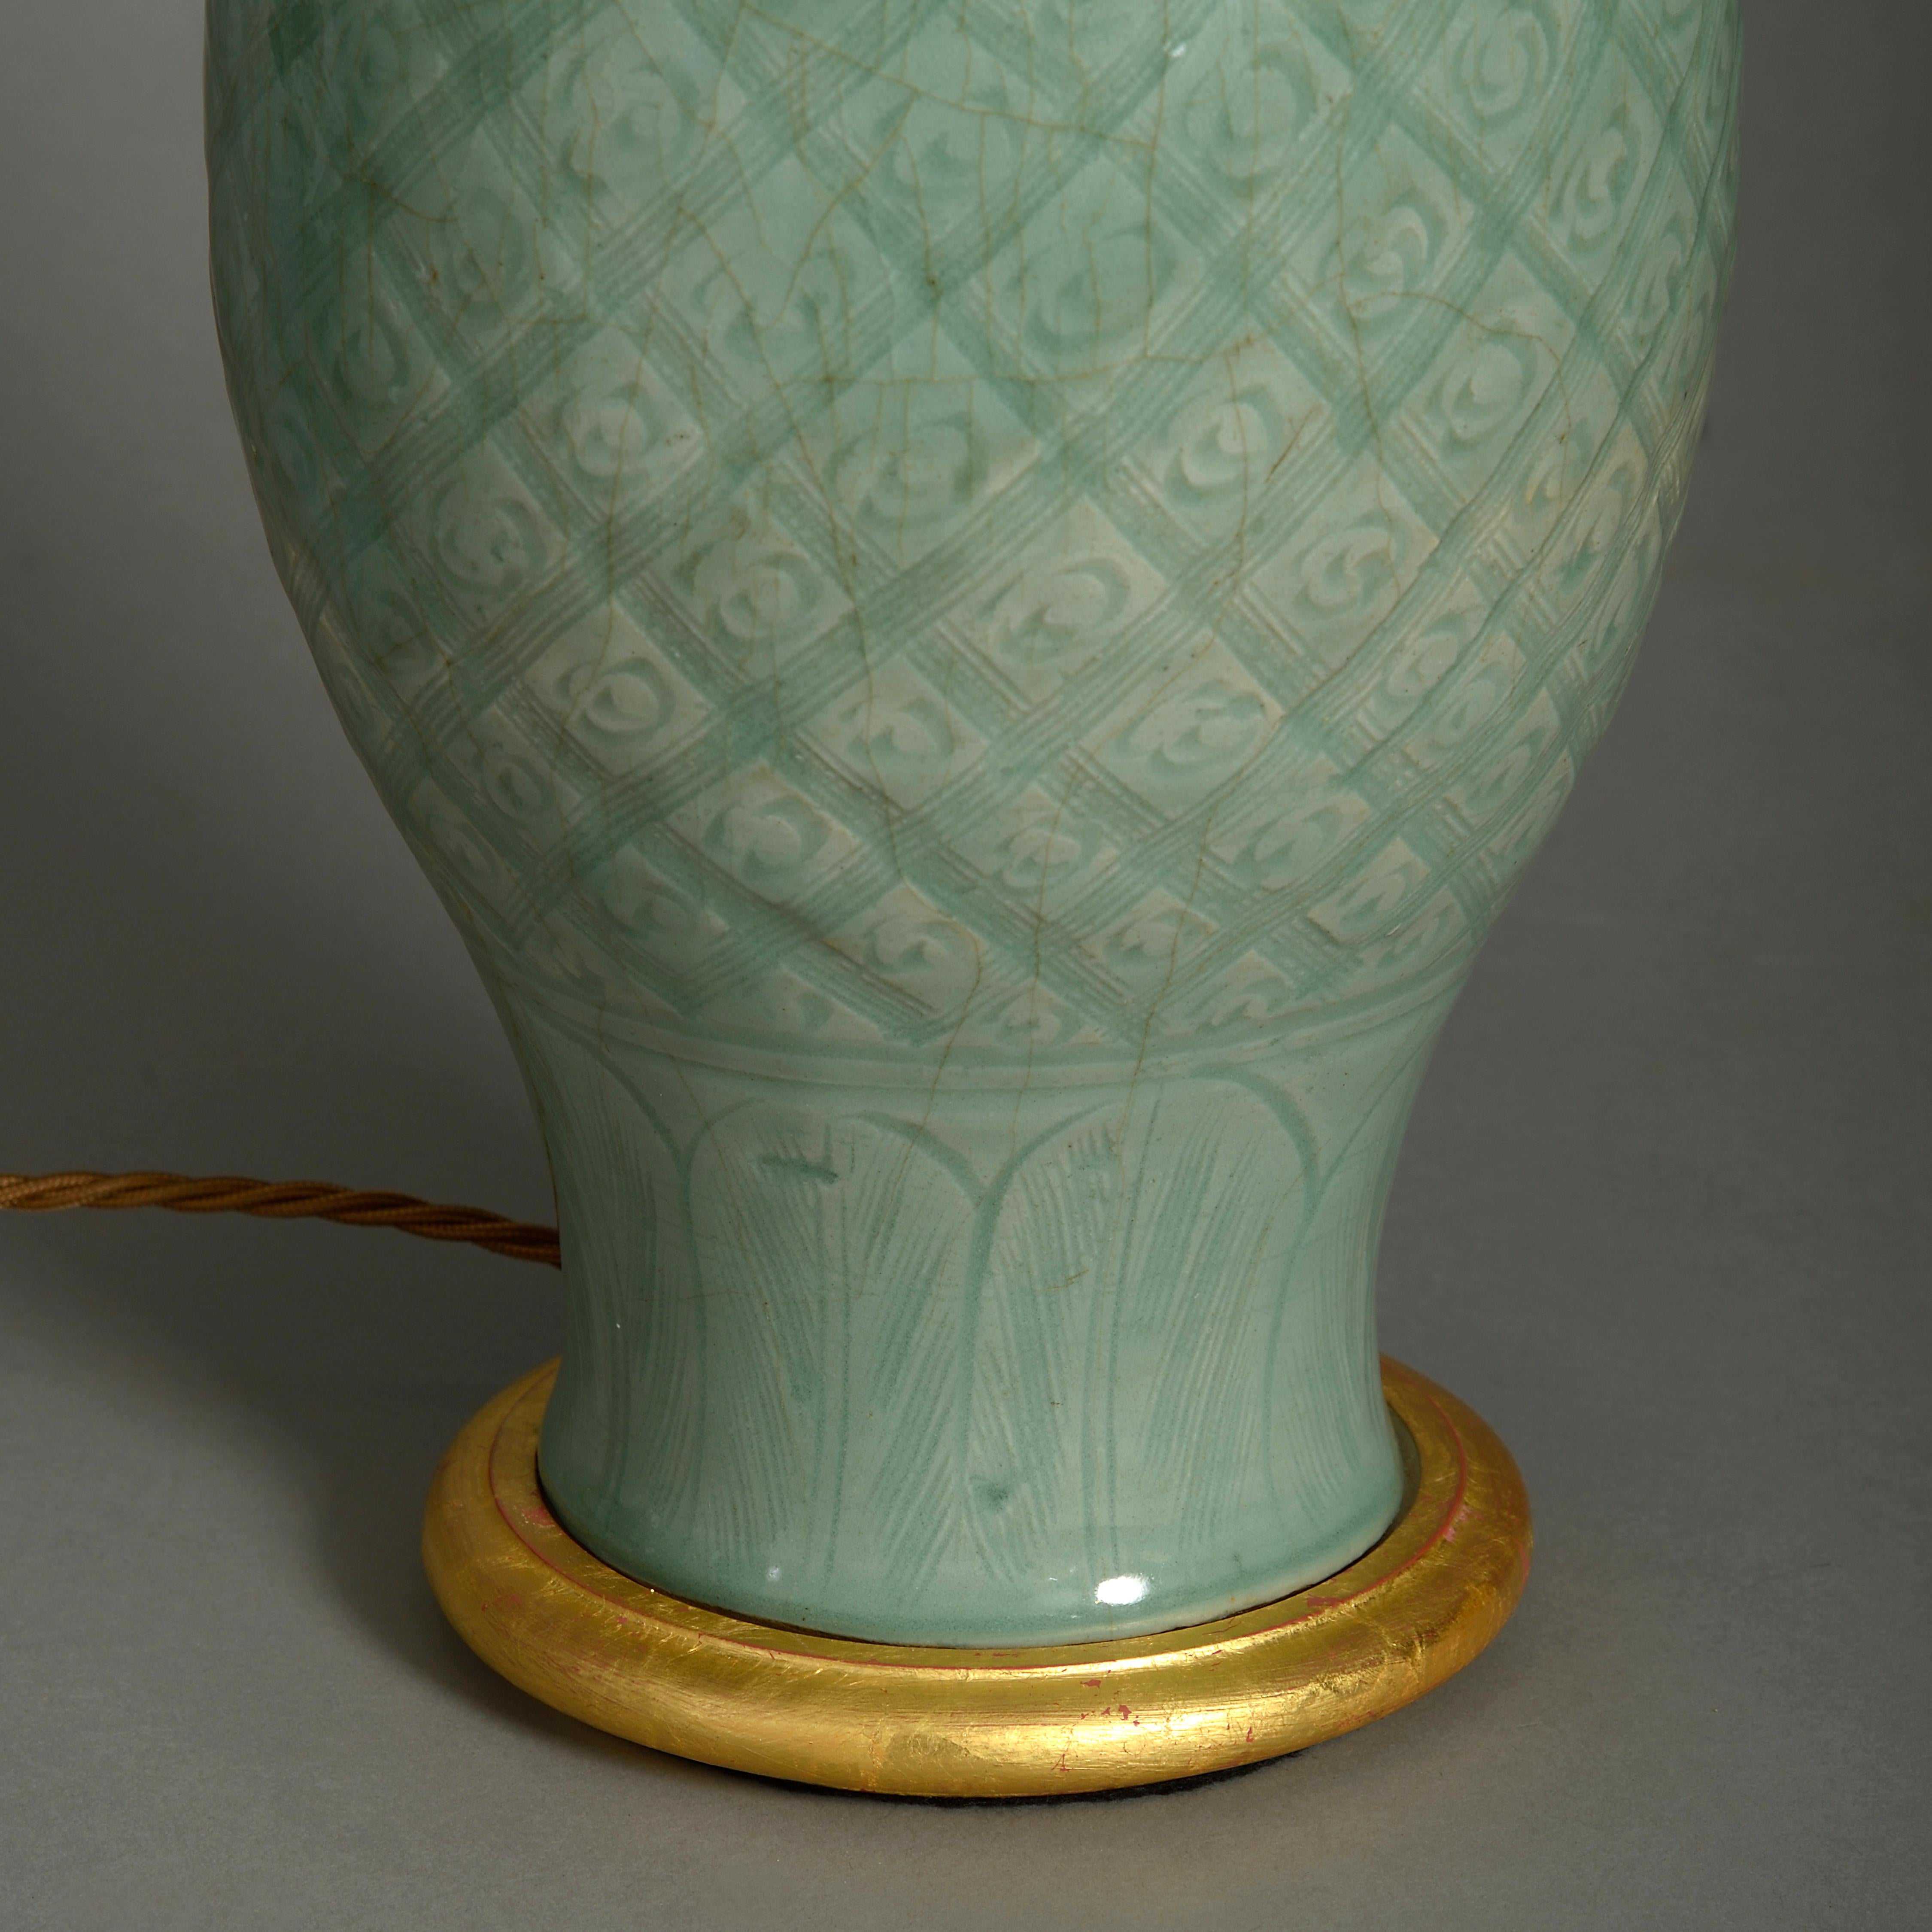 Chinese Export 16th Century Ming Period Celadon Porcelain Vase Lamp